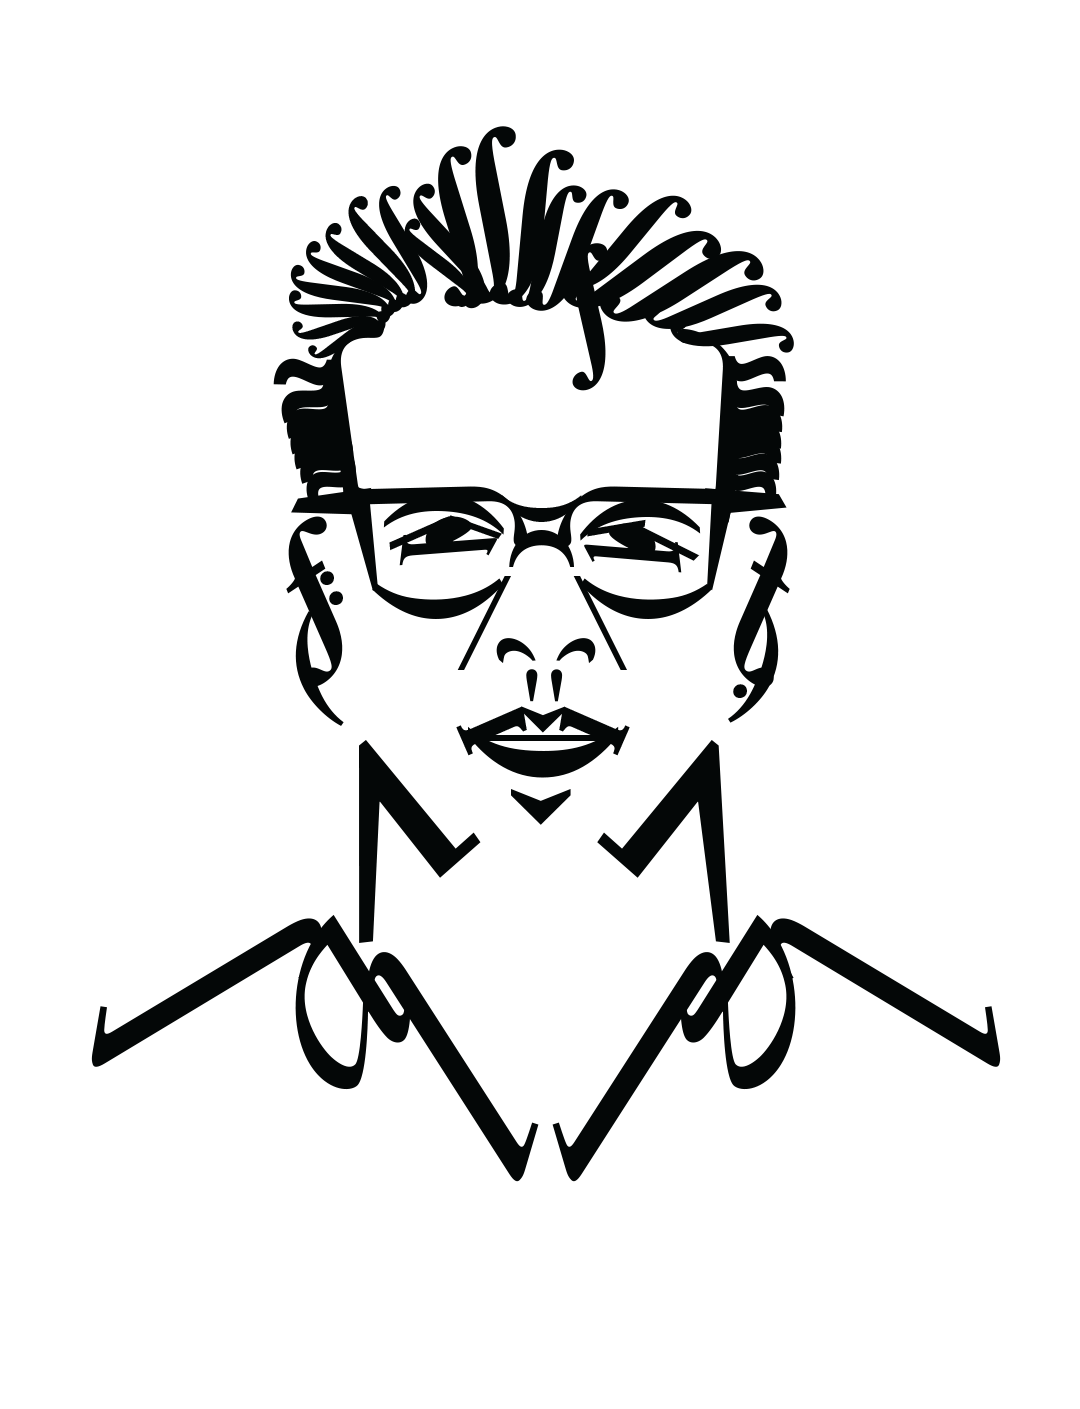 Type Portrait of Andy Clarke